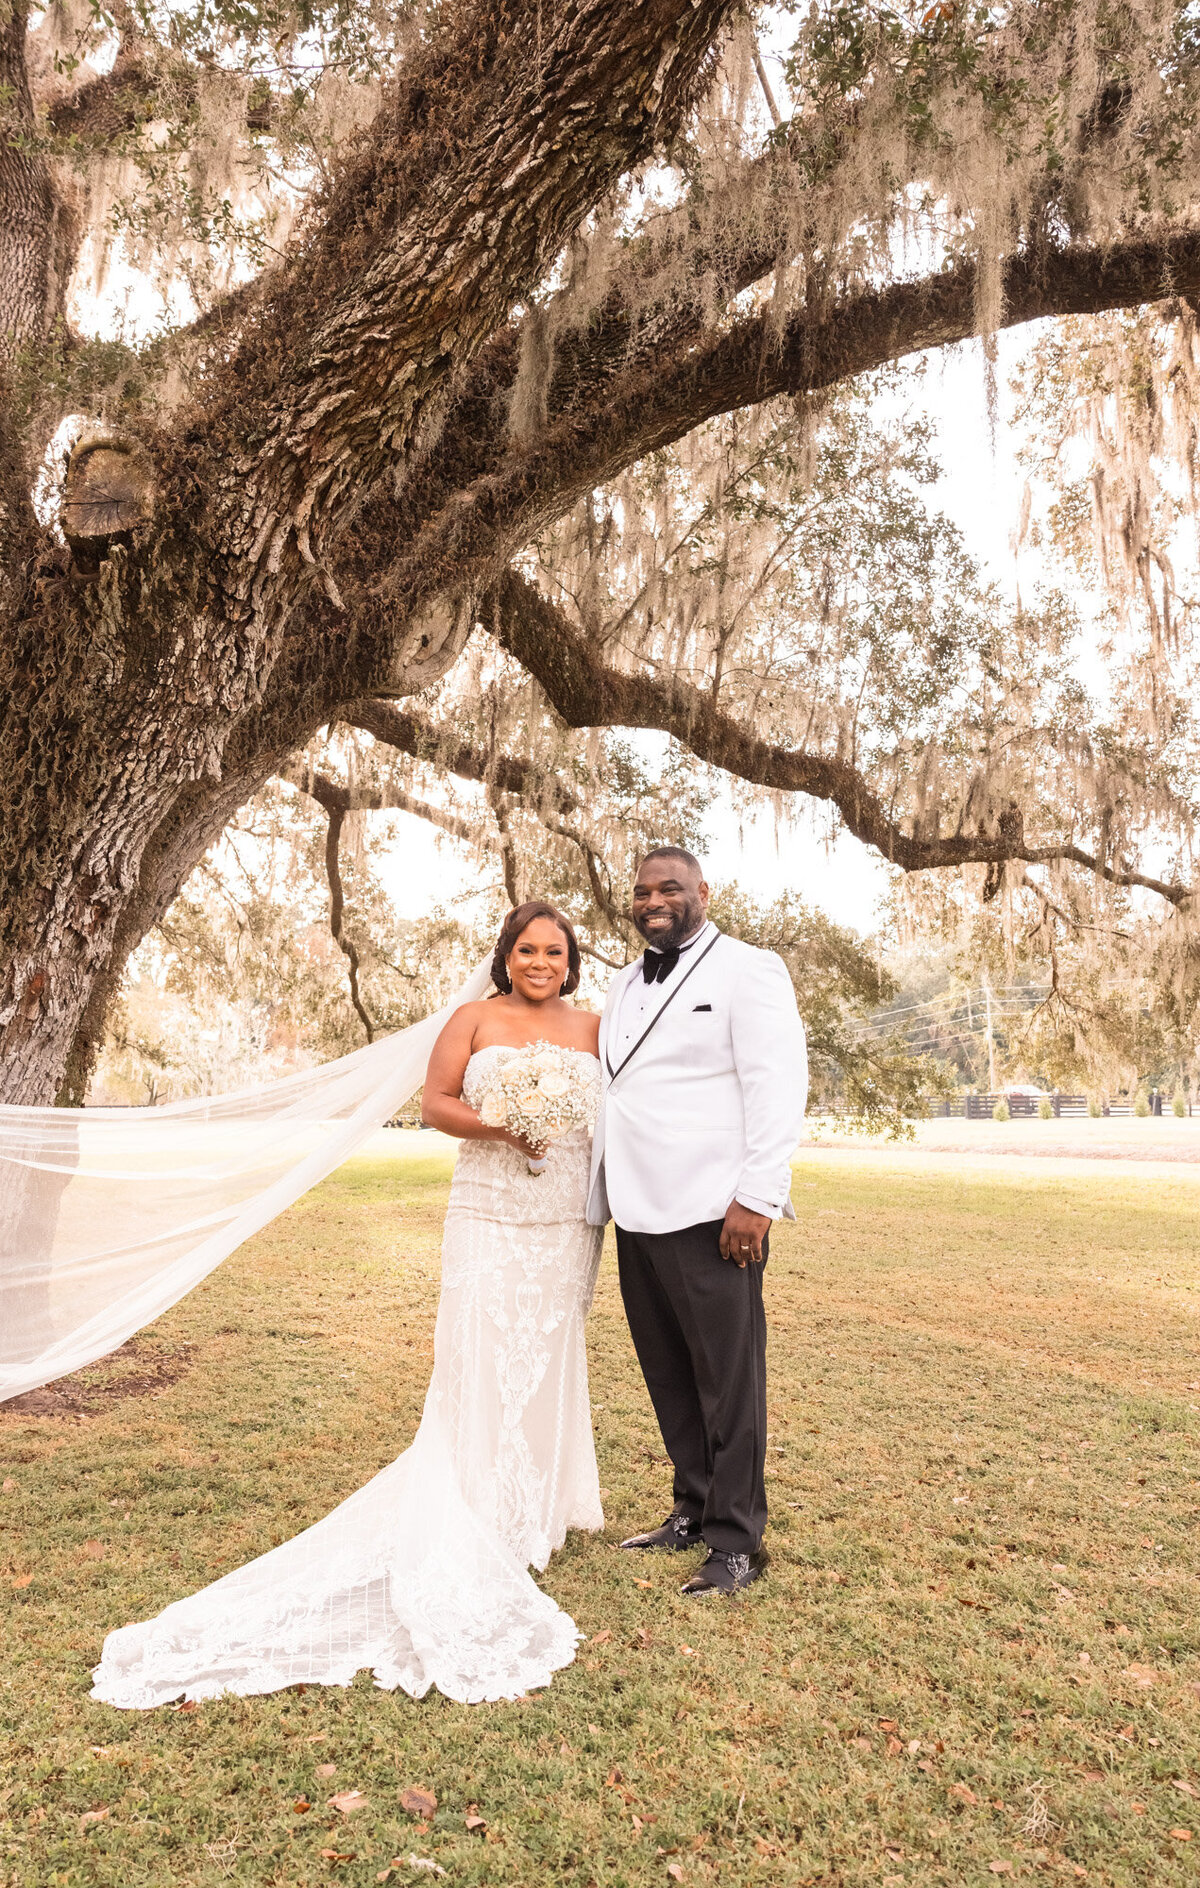 Michael and Mishka-Wedding-Green Cabin Ranch-Astatula, FL-FL Wedding Photographer-Orlando Photographer-Emily Pillon Photography-S-120423-246